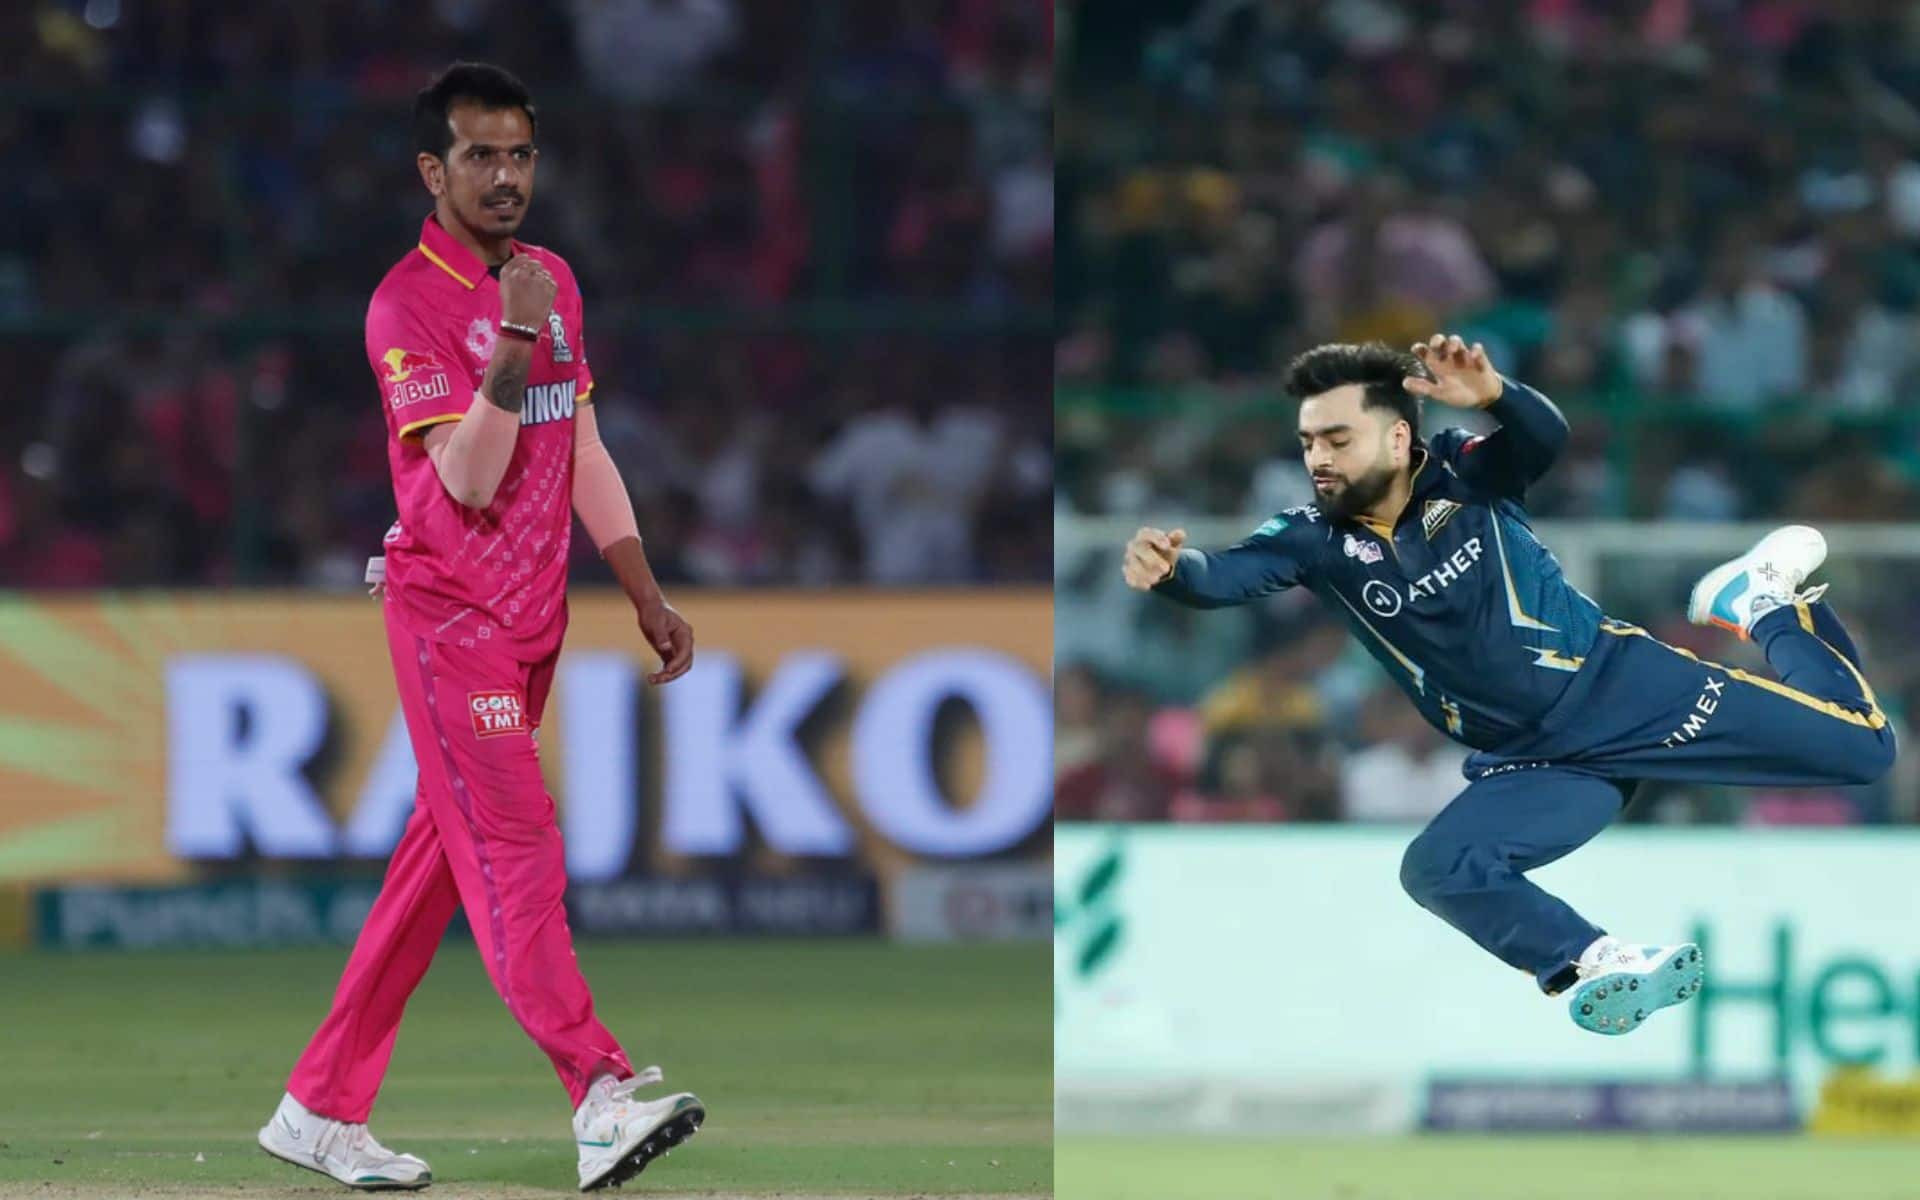 Yuzvendra Chahal vs Rashid Khan - Who Has Performed Better For His Franchise In IPL?